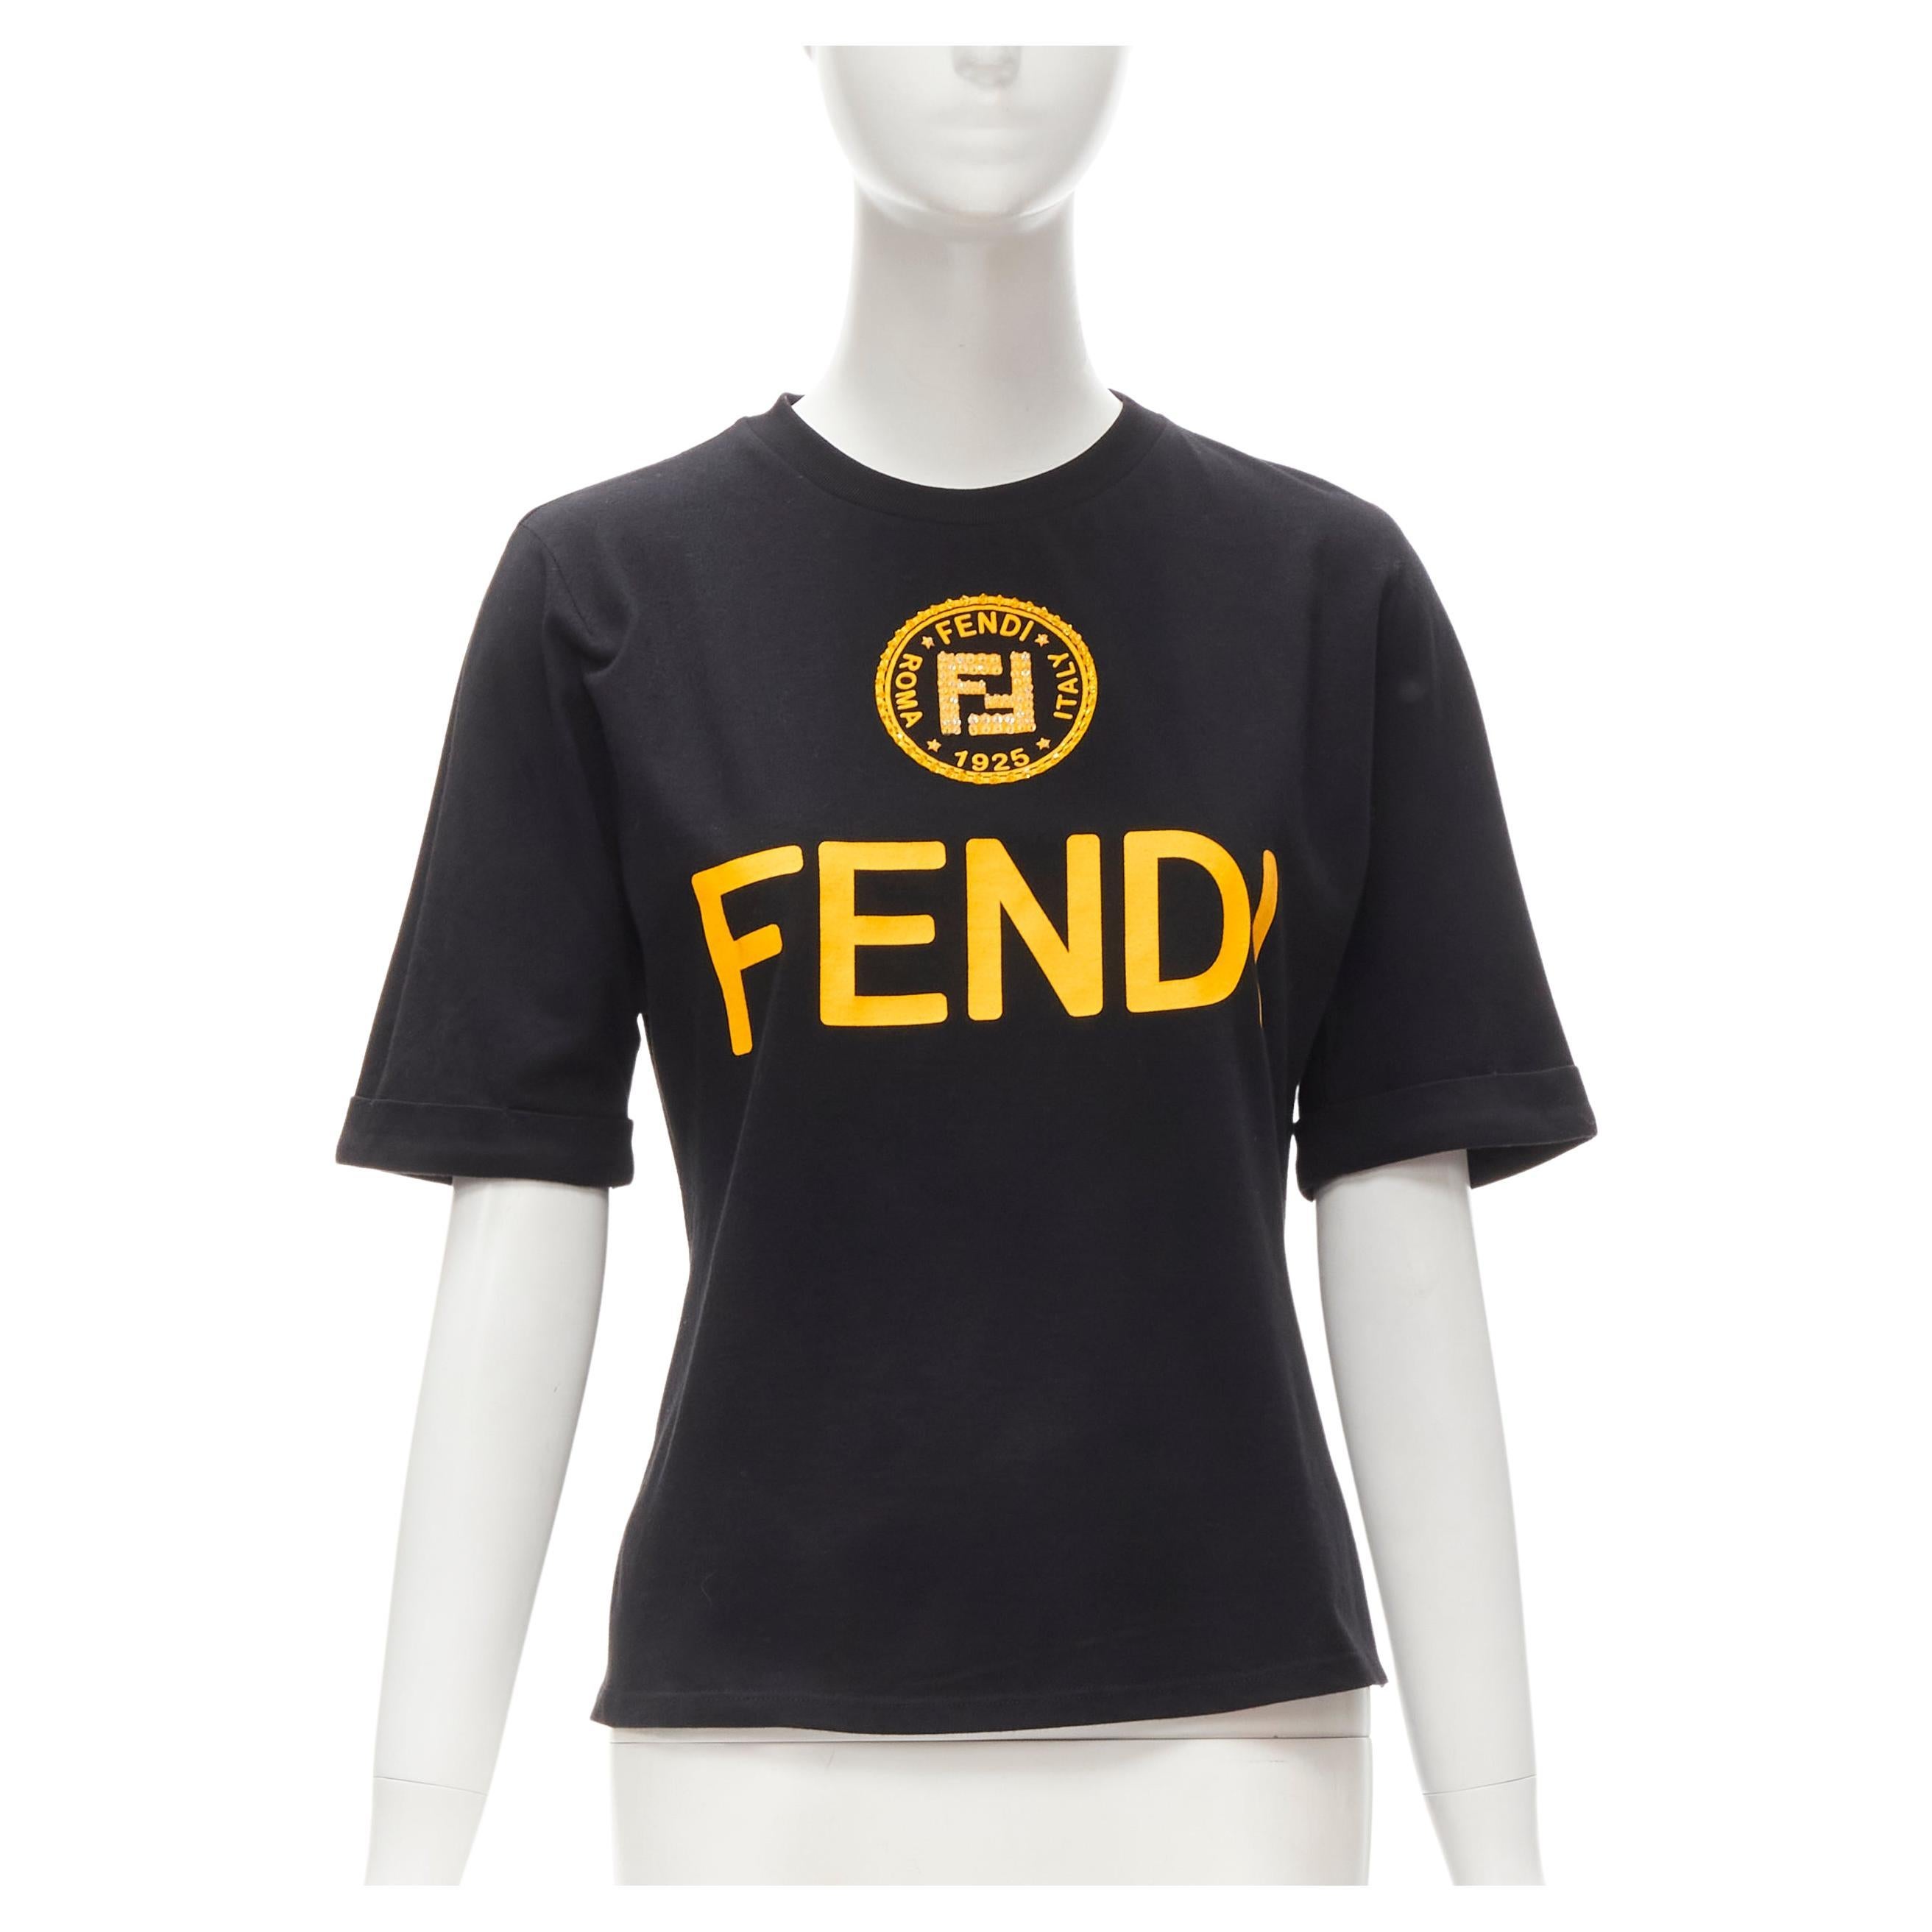 Fendi Tshirt - 4 For Sale on 1stDibs | fendi tops womens sale, fendi shirt  women's sale, fendi t shirt femme